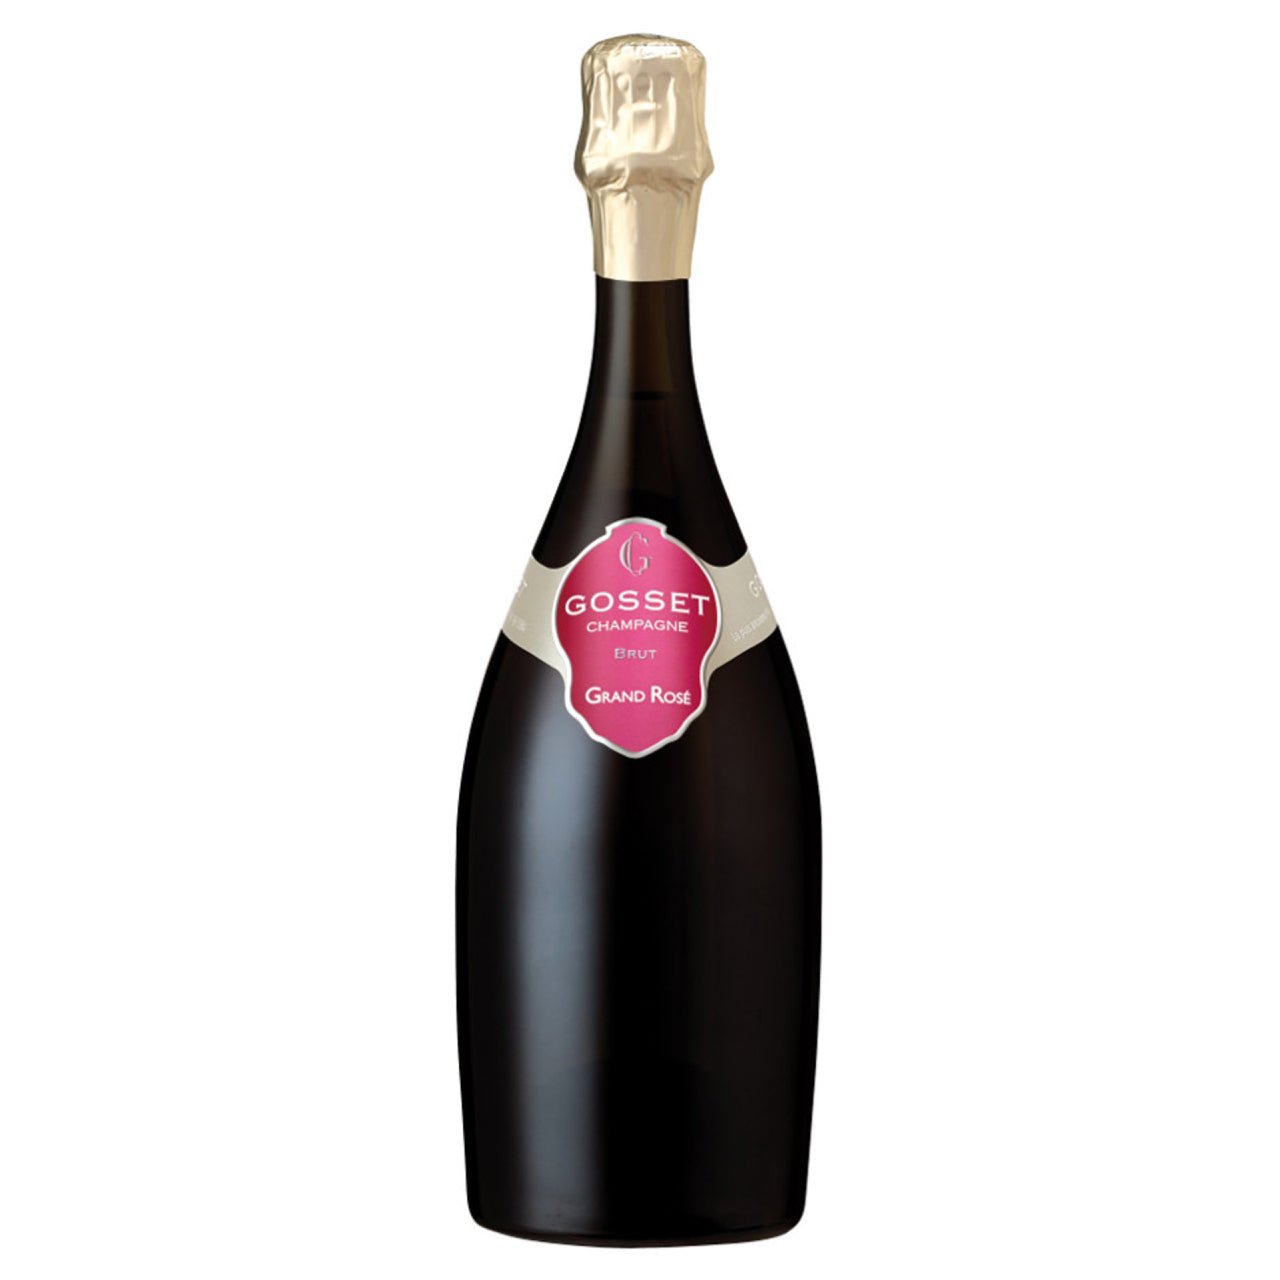 Gosset Champagne NV Grand Rose MAGNUM - Wine France Champagne - Liquor Wine Cave